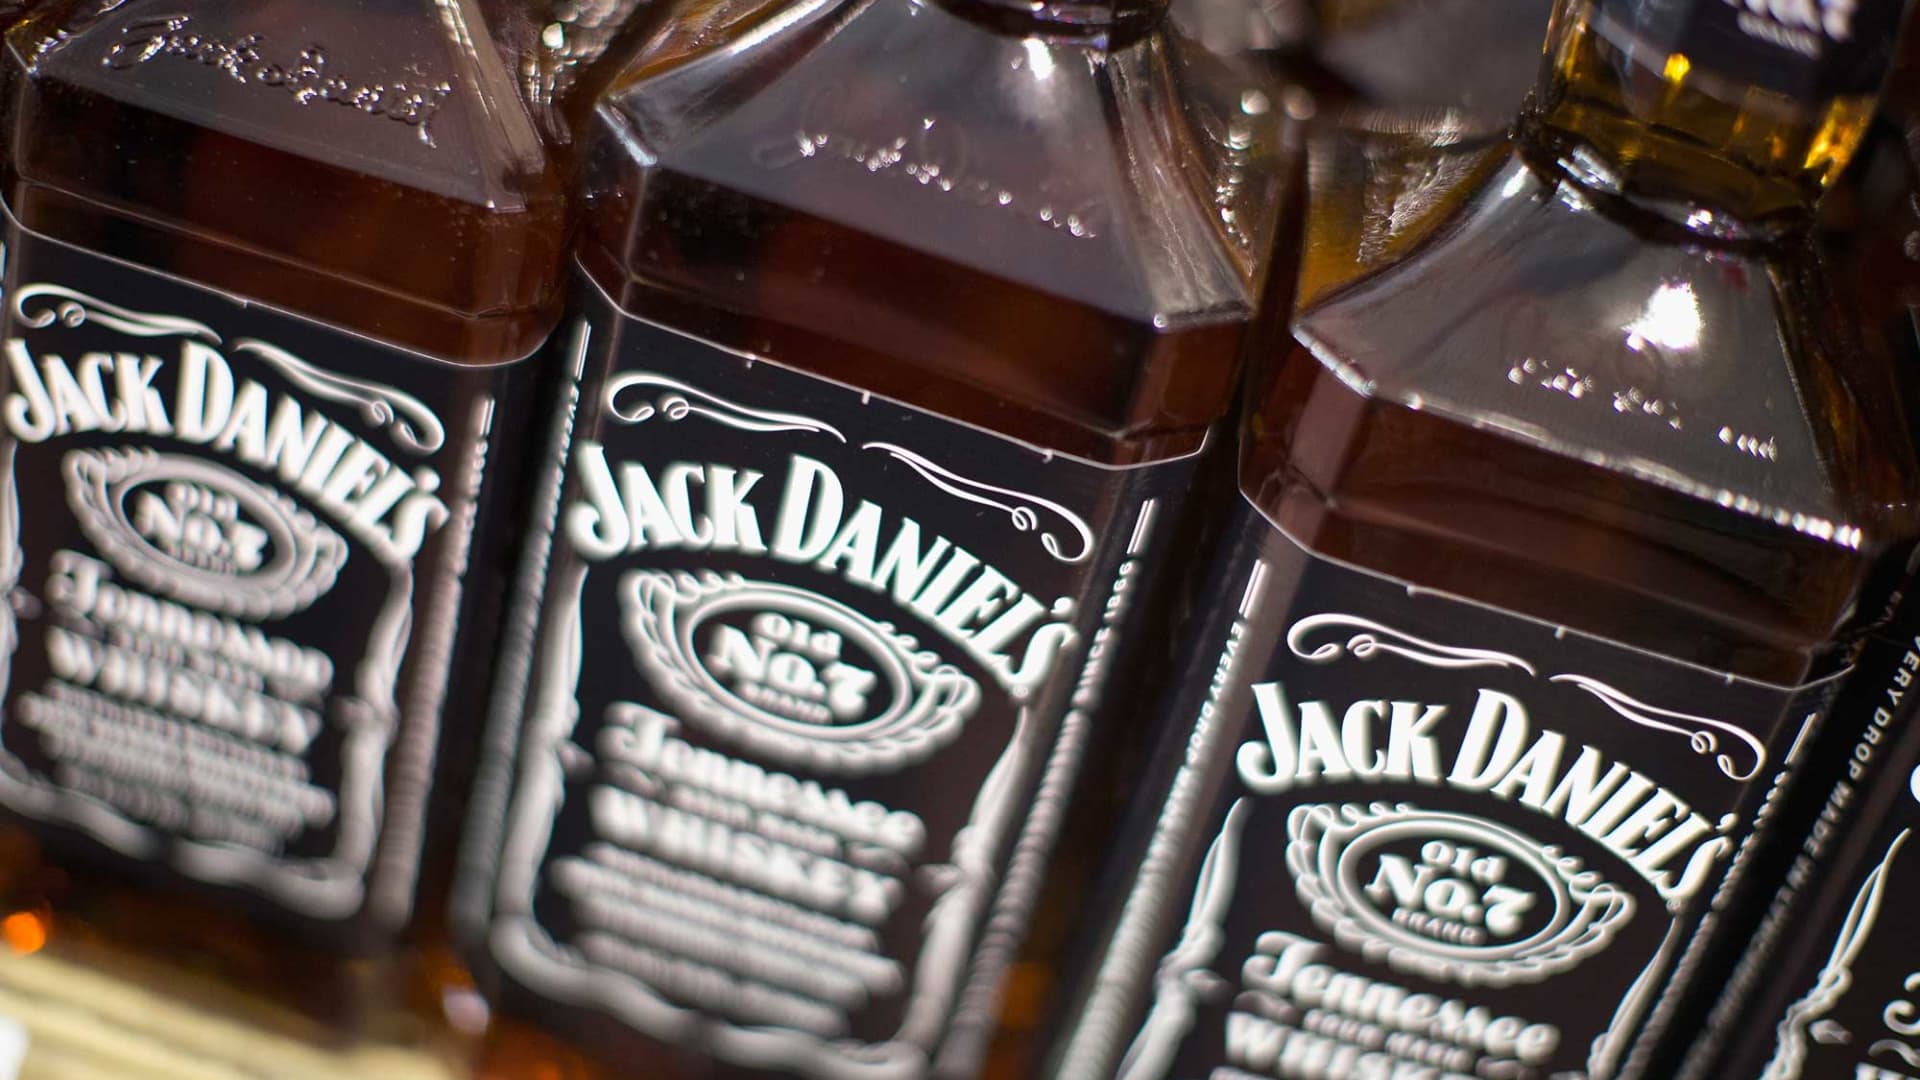 Jack Daniel’s maker Brown-Forman reports lagging whiskey gross sales, narrower profit